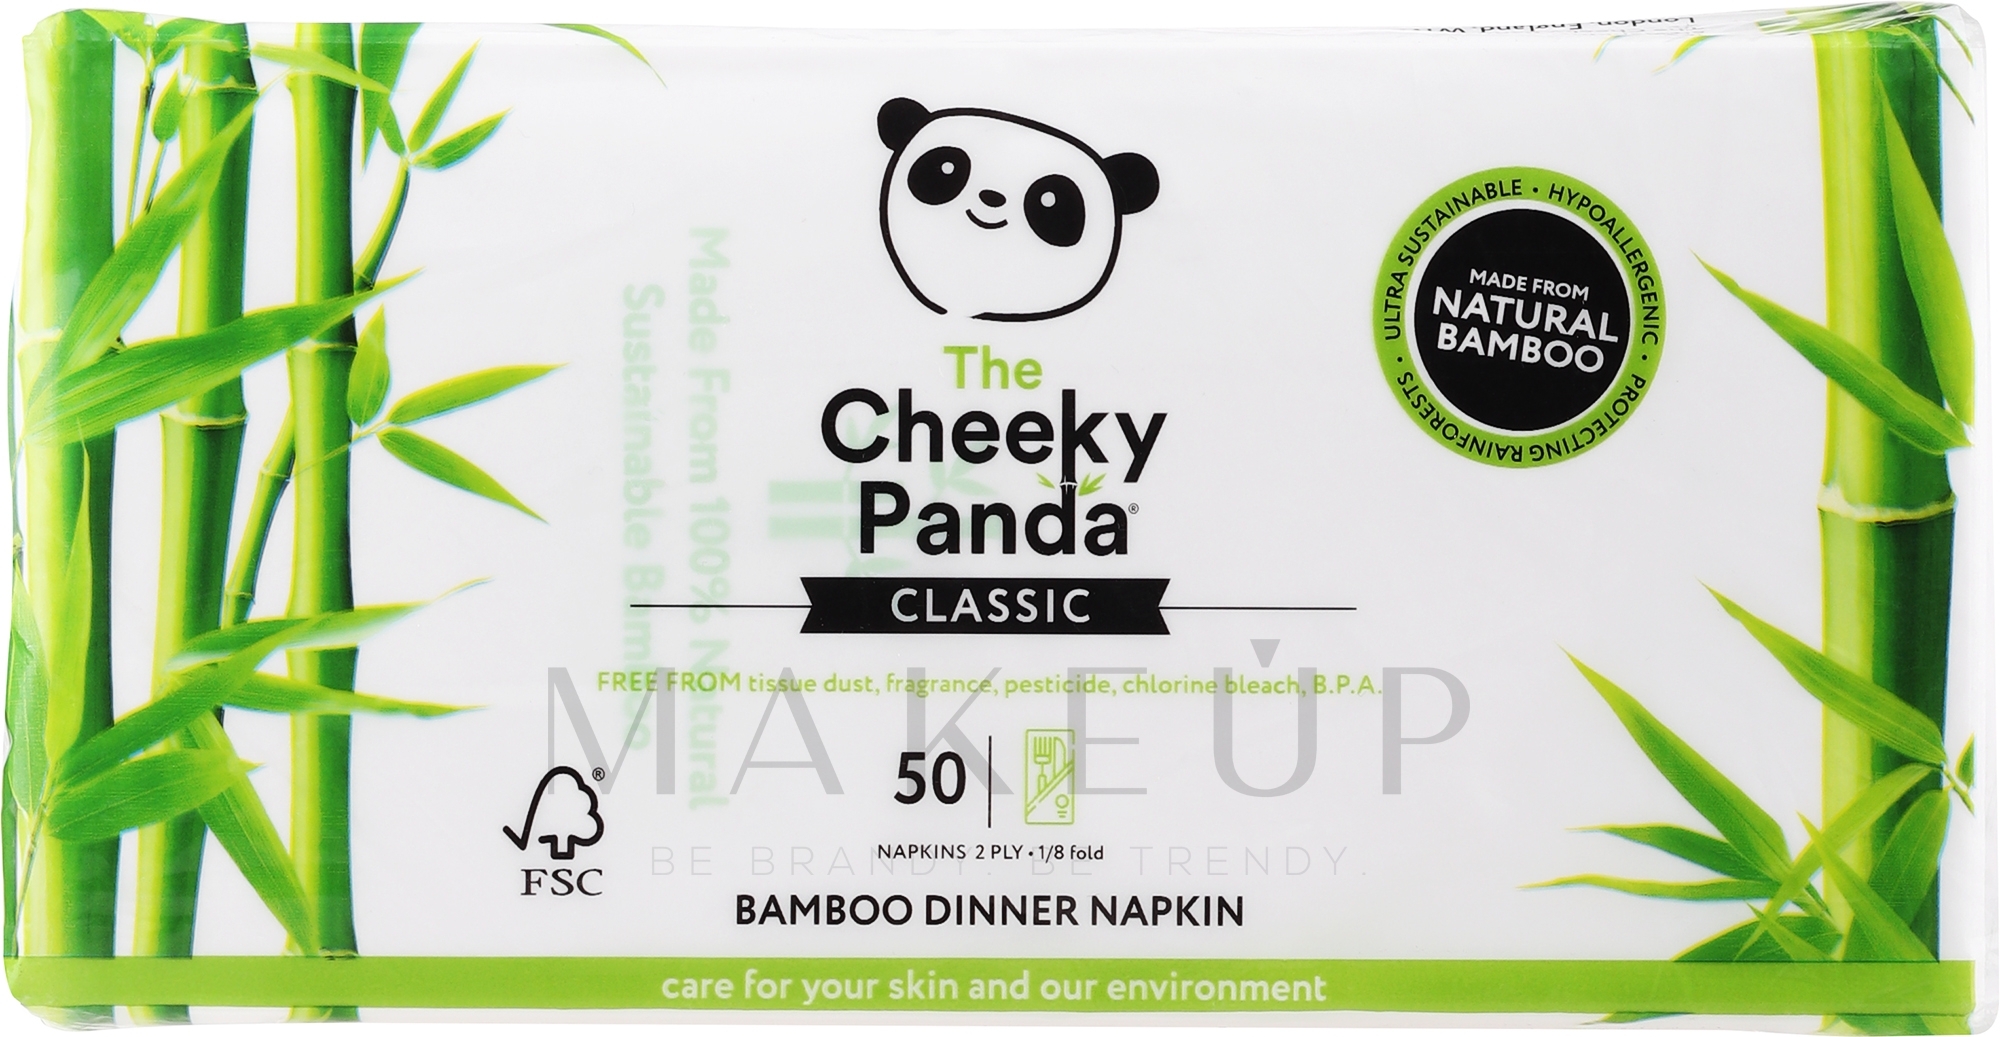 Servietten aus Bambus 50 St. - The Cheeky Panda — Bild 50 St.